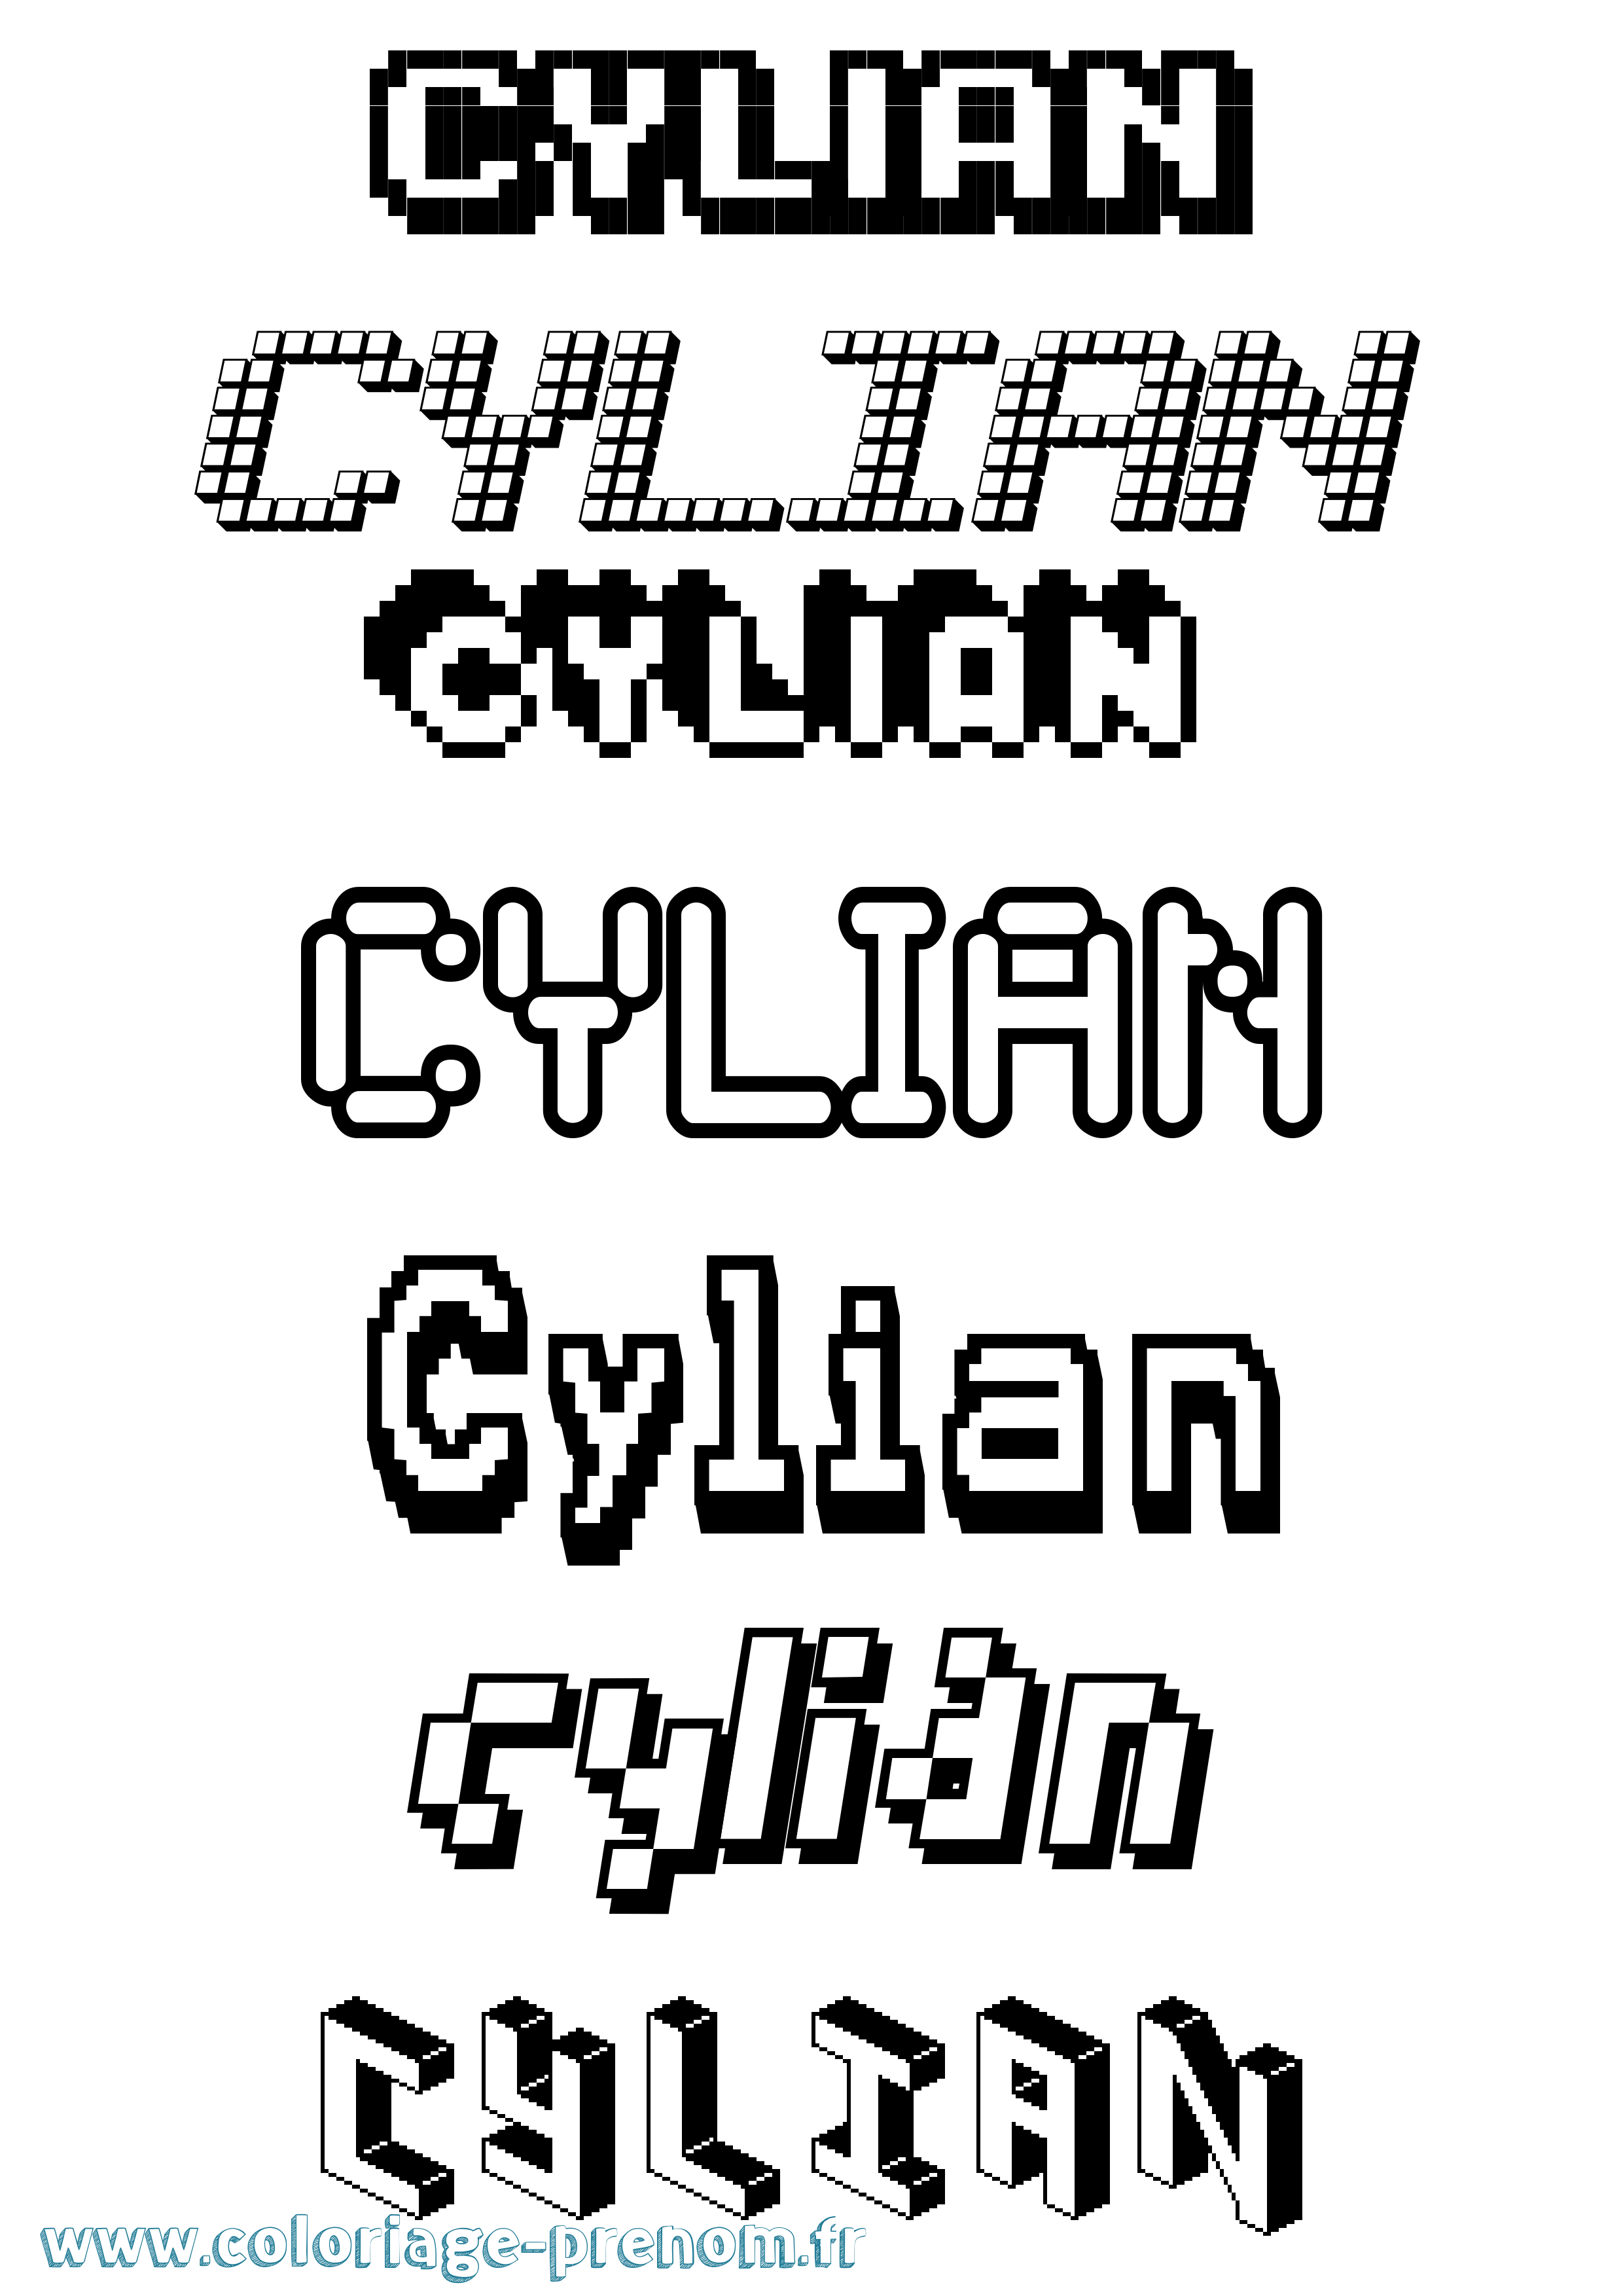 Coloriage prénom Cylian Pixel